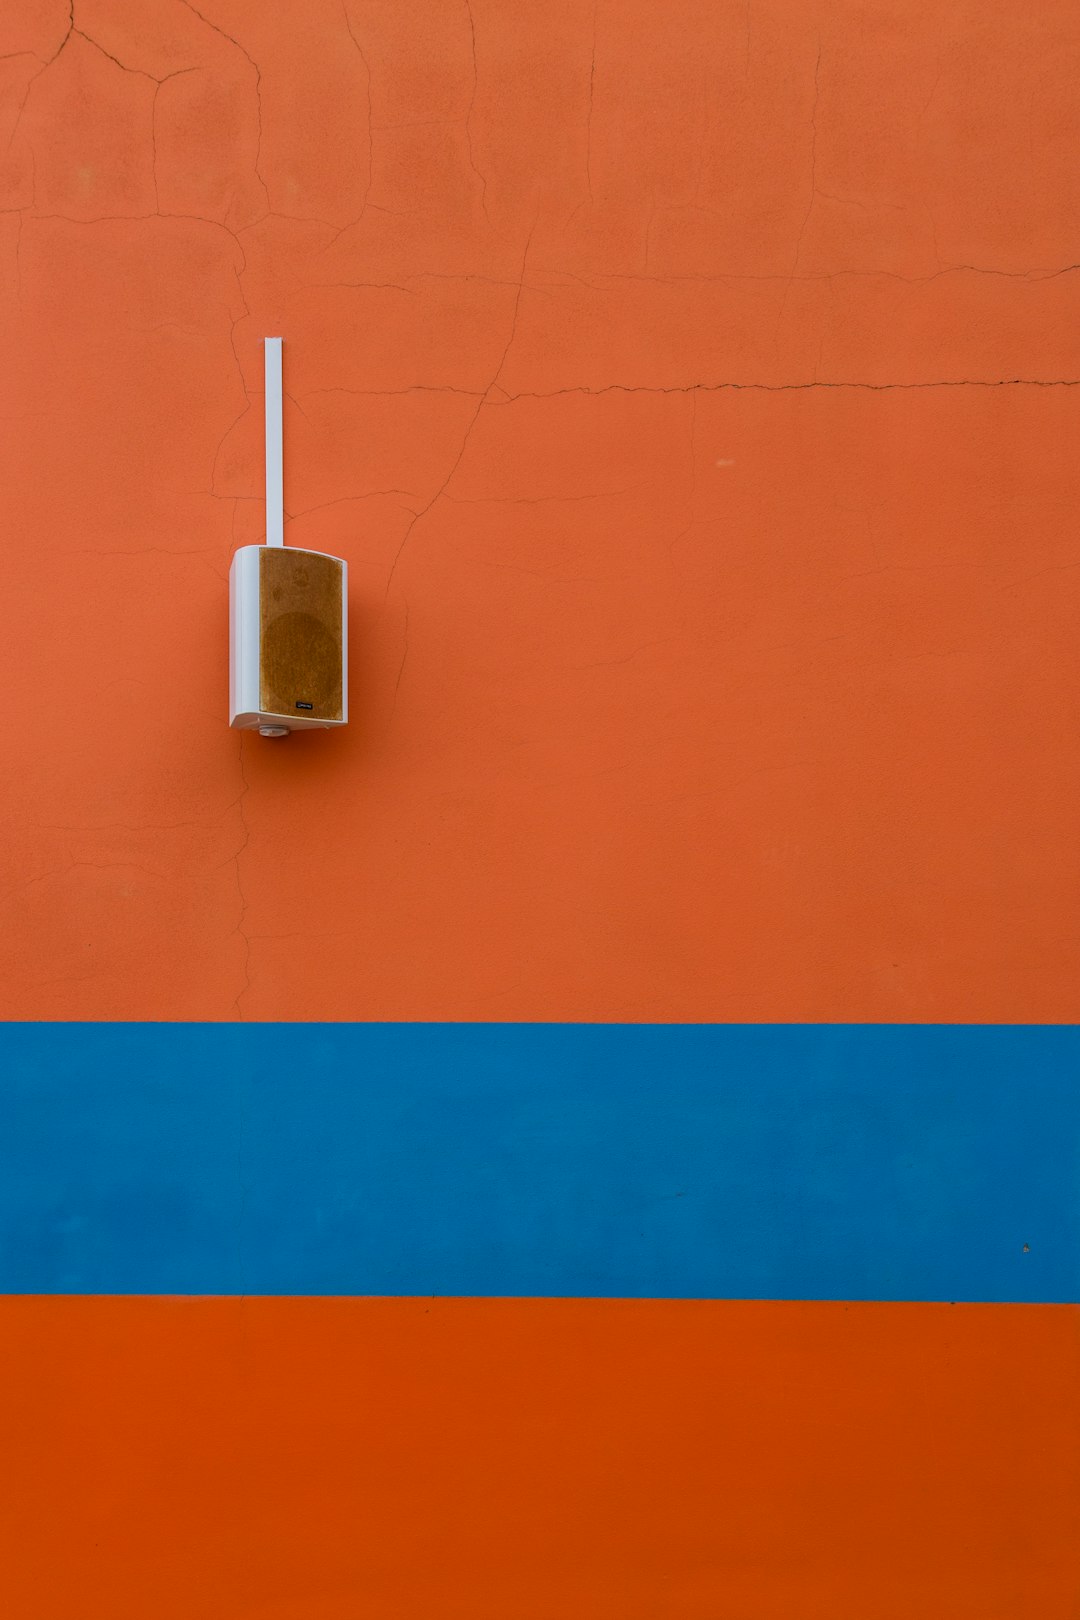 white speaker mounted on orange painted wall